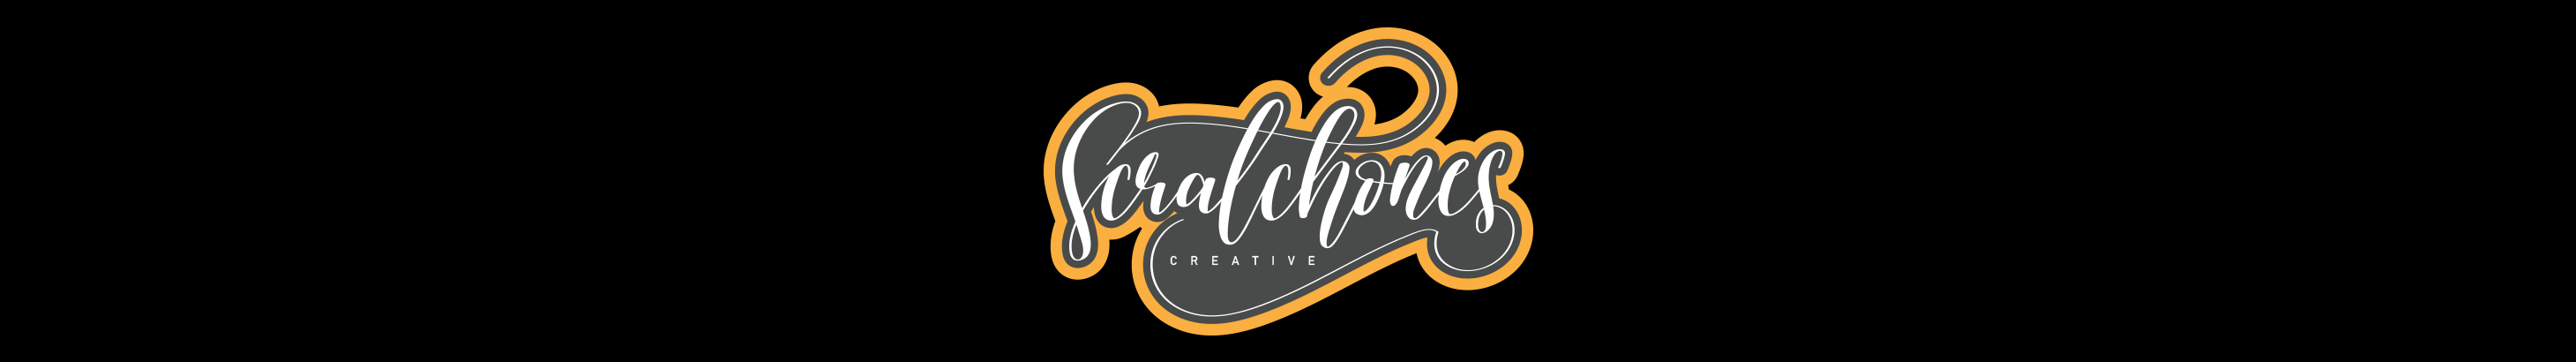 Scratchones creative's profile banner